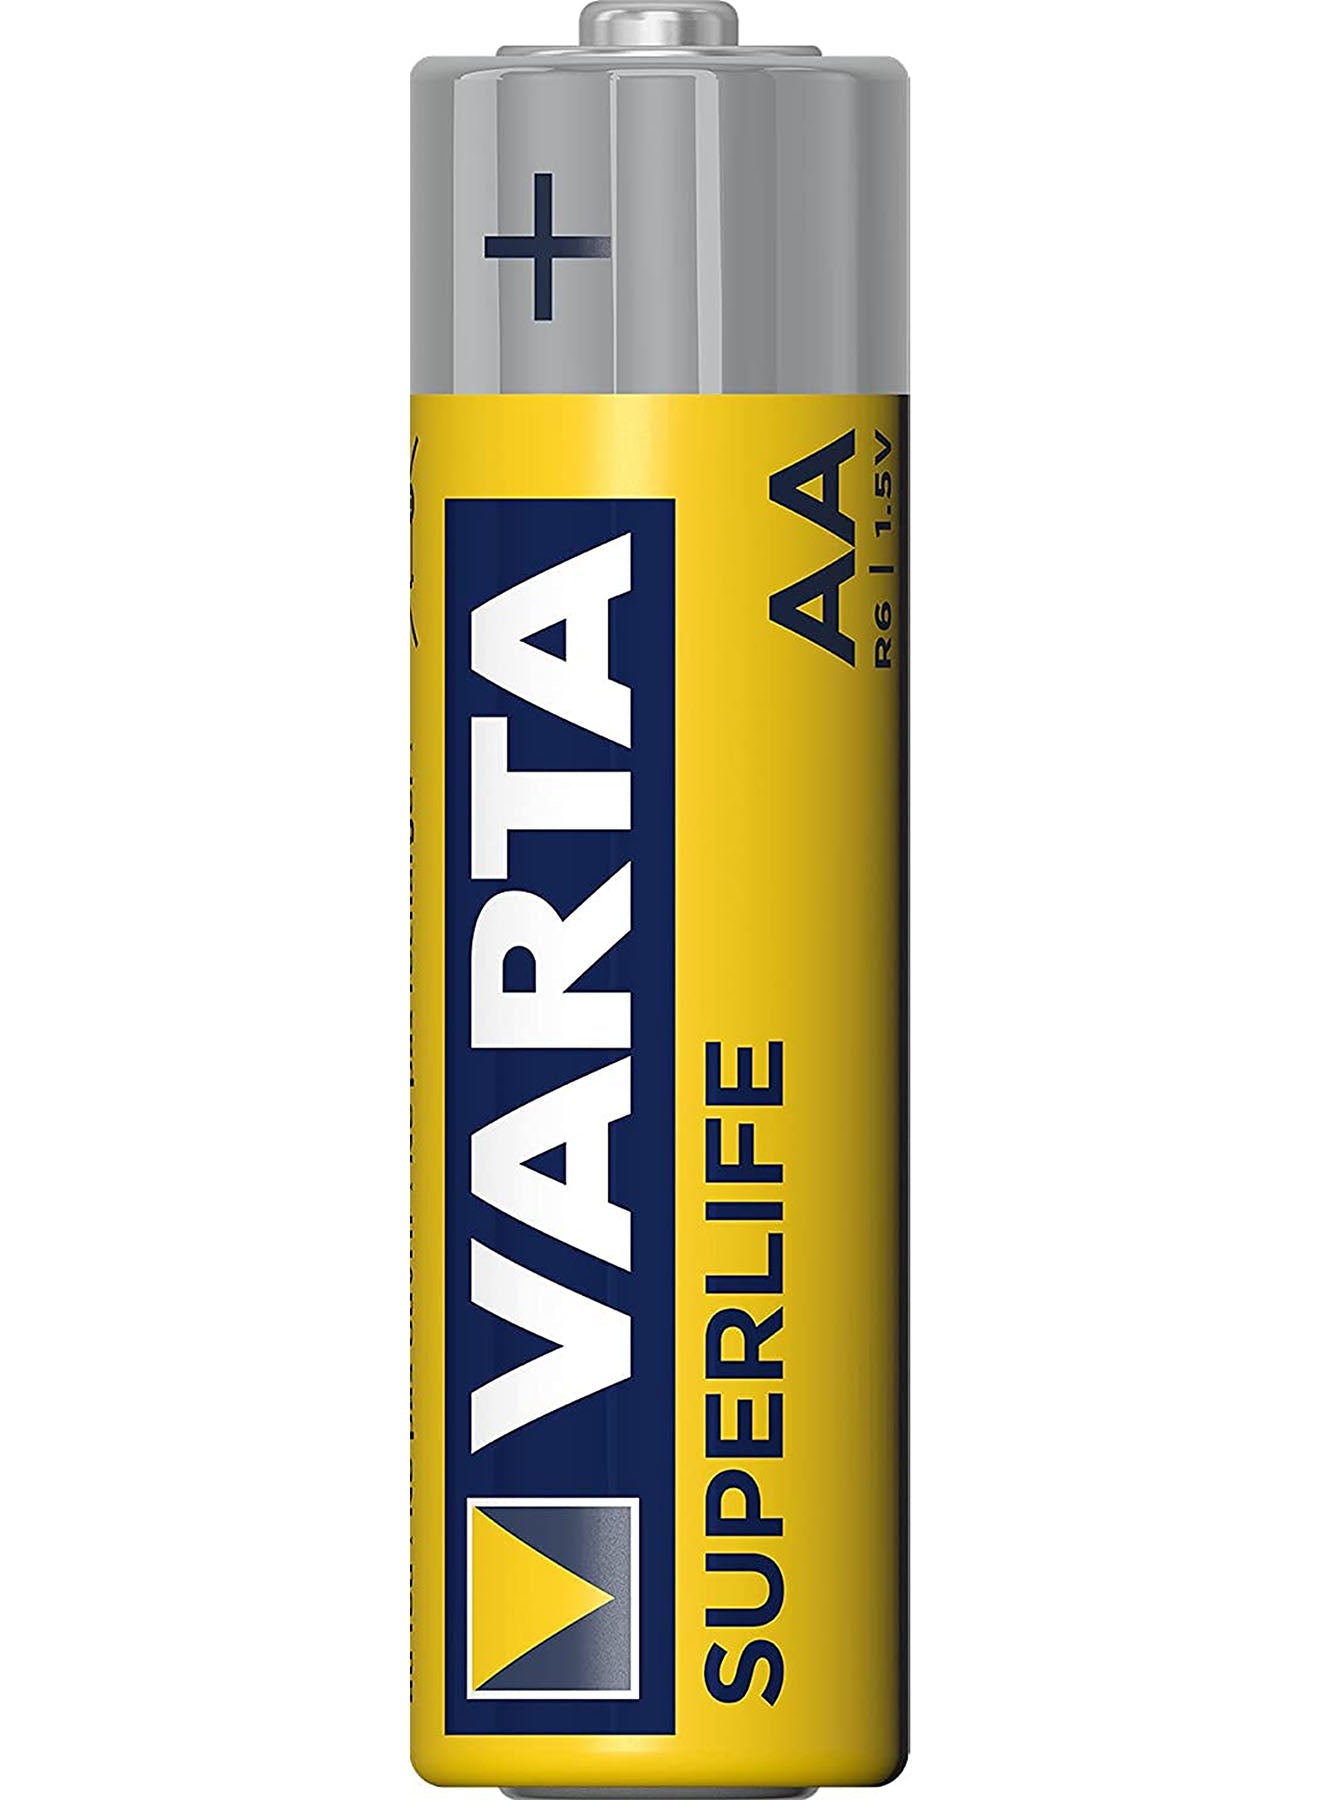 Varta Superlife AA Battery 4 Units Value Pack of 4 